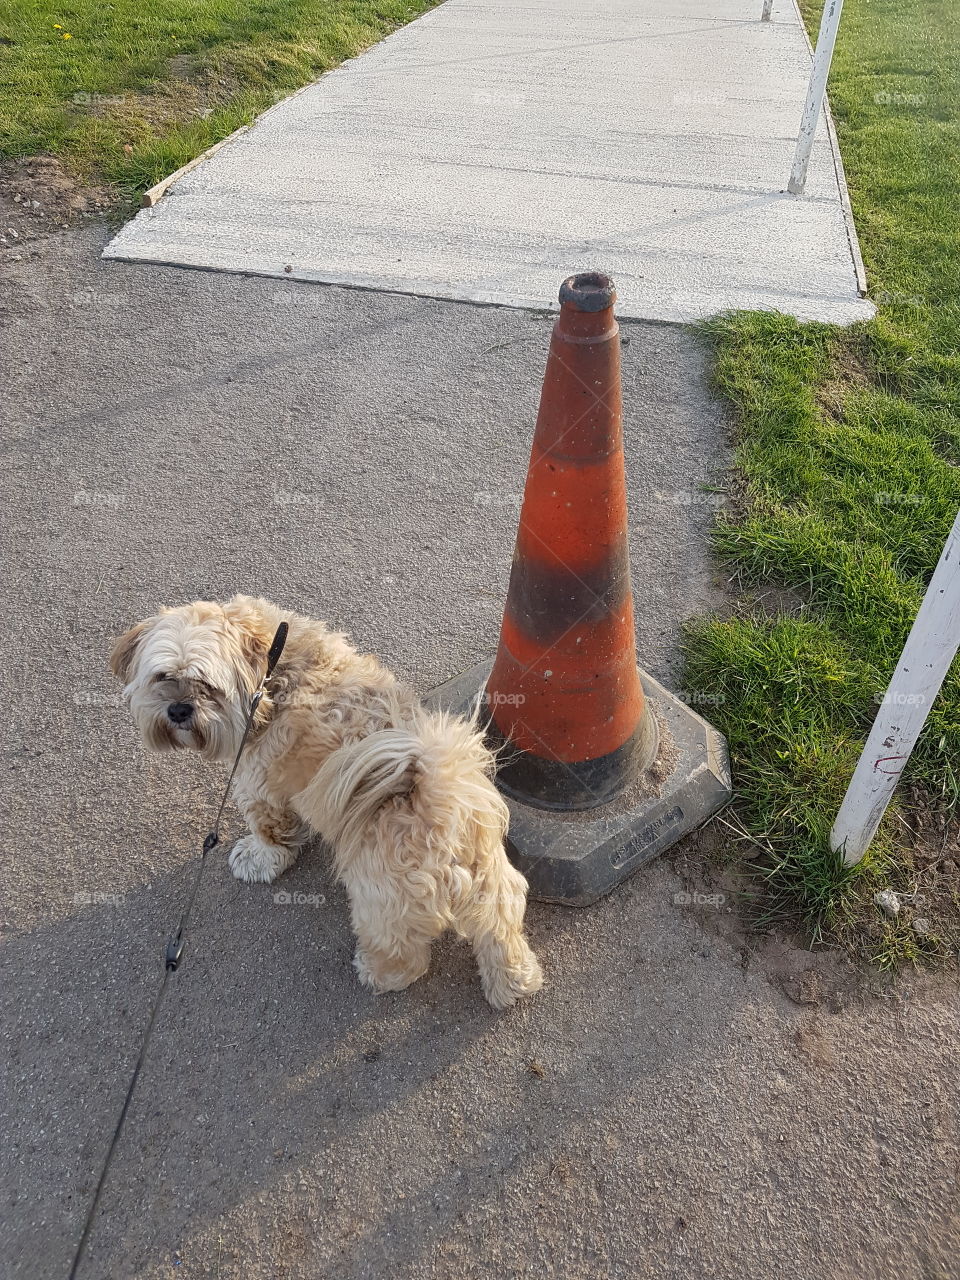 Pavement, Road, Street, Dog, Asphalt